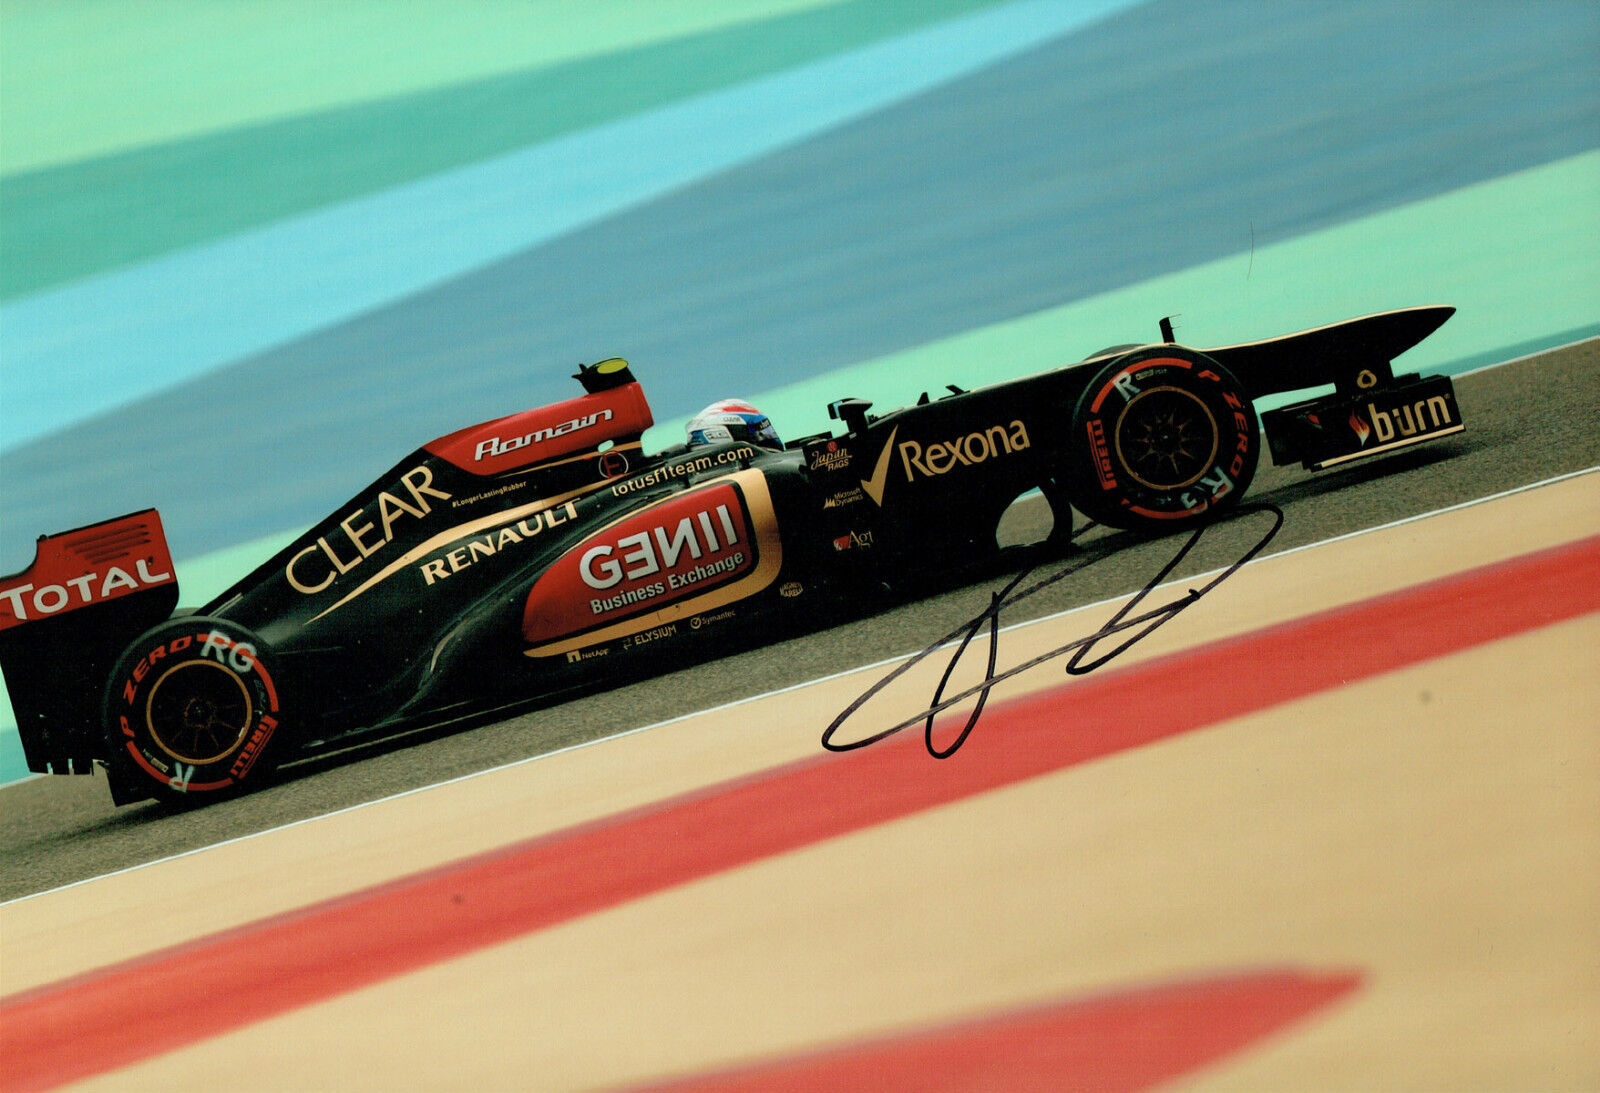 Romain GROSJEAN SIGNED LOTUS F1 Autograph 12x8 Bahrain Race Photo Poster painting AFTAL COA